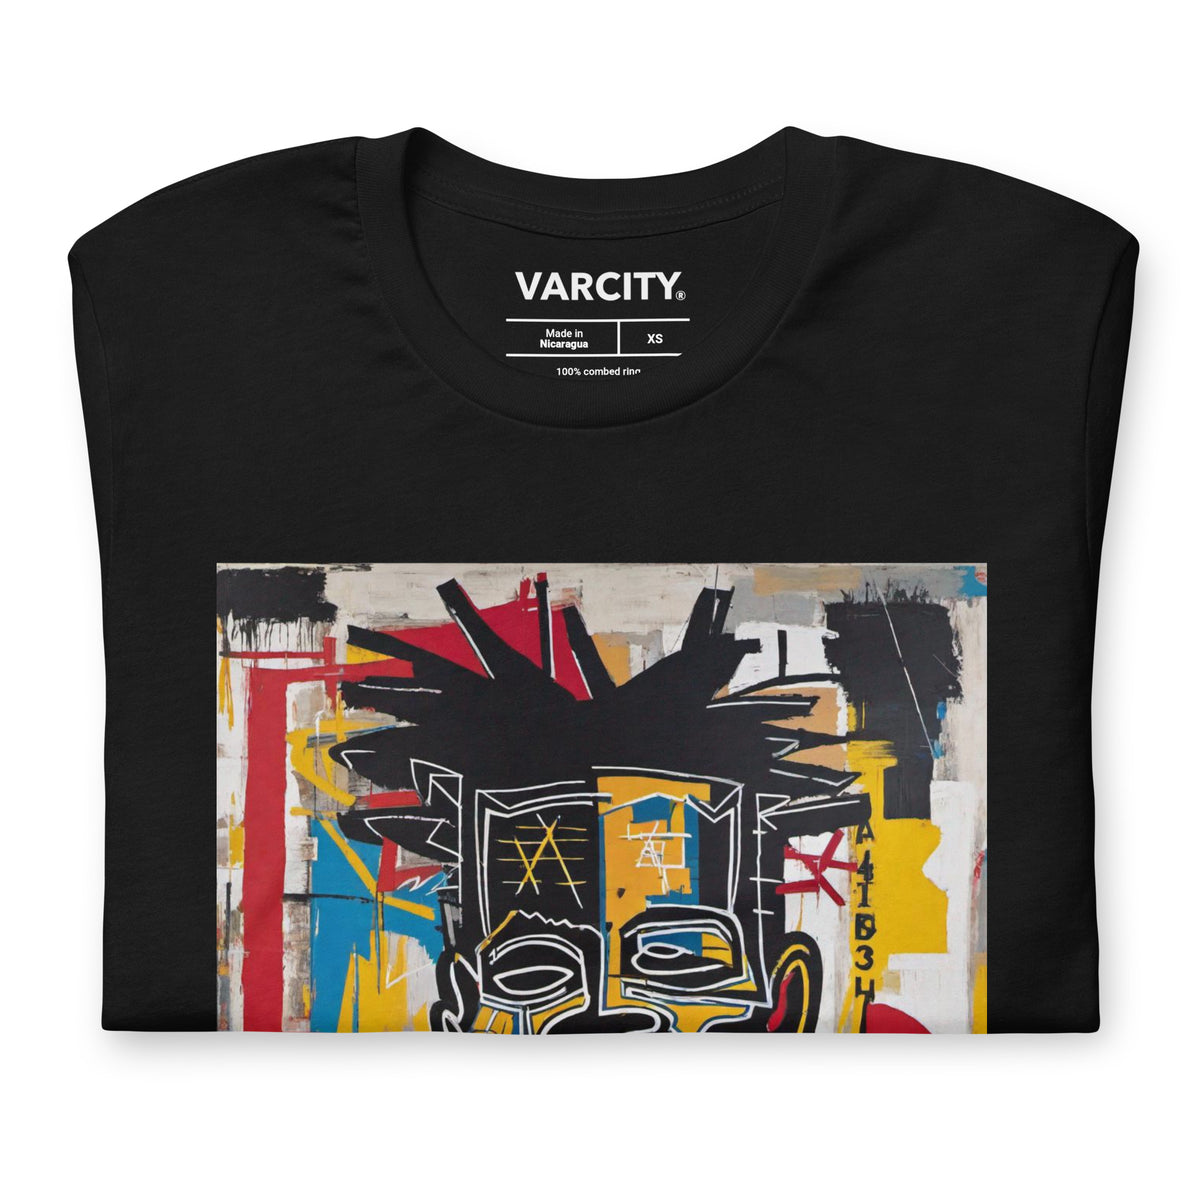 Human Element Basquiat inspired Unisex T-Shirt